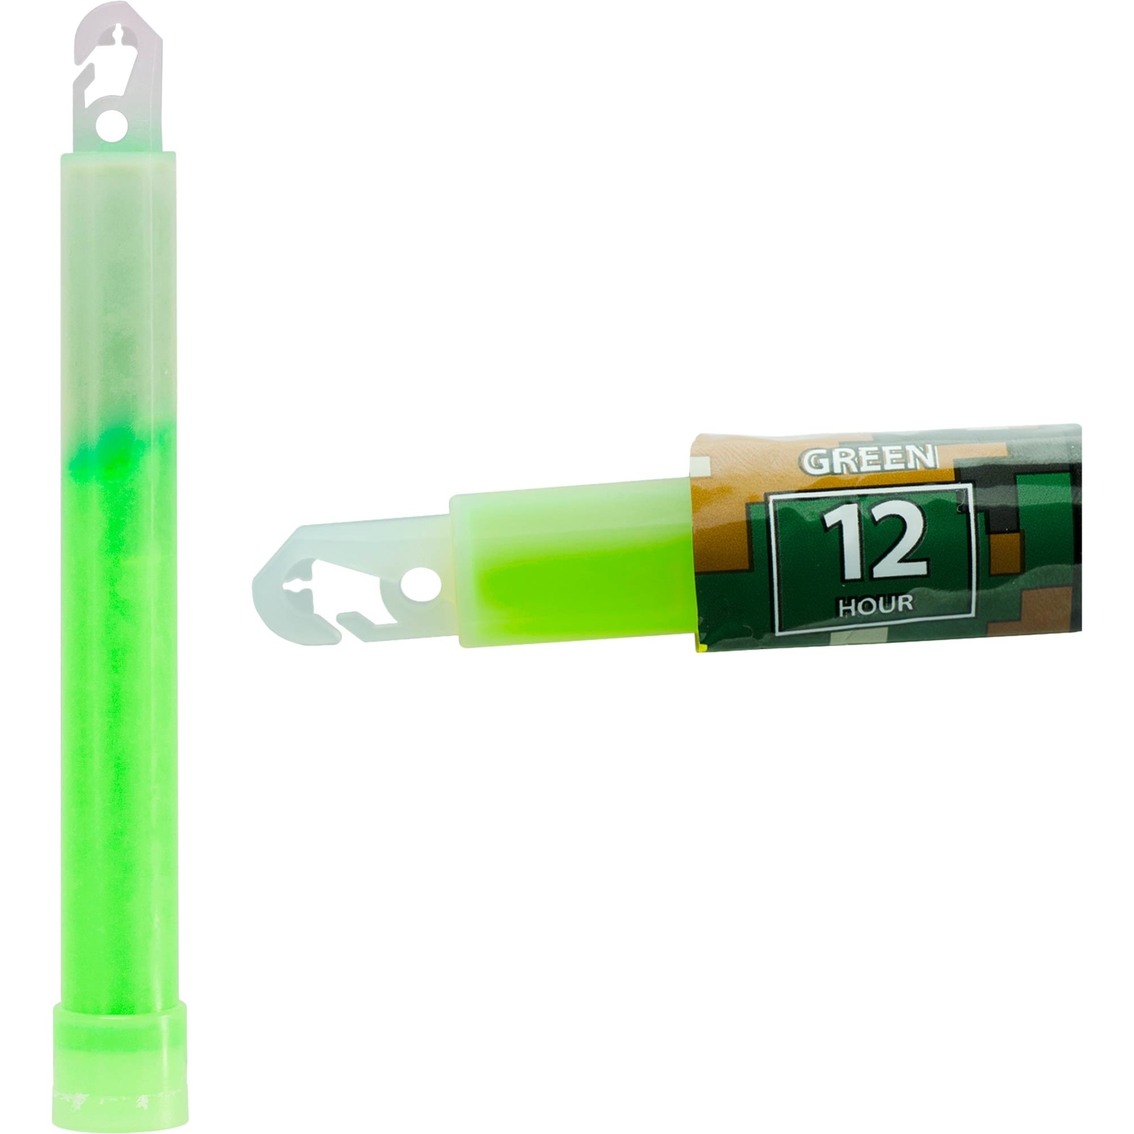 15 Cyalume Impact Self-Activating Light Sticks, 12 Hour, Green, 5 Pack